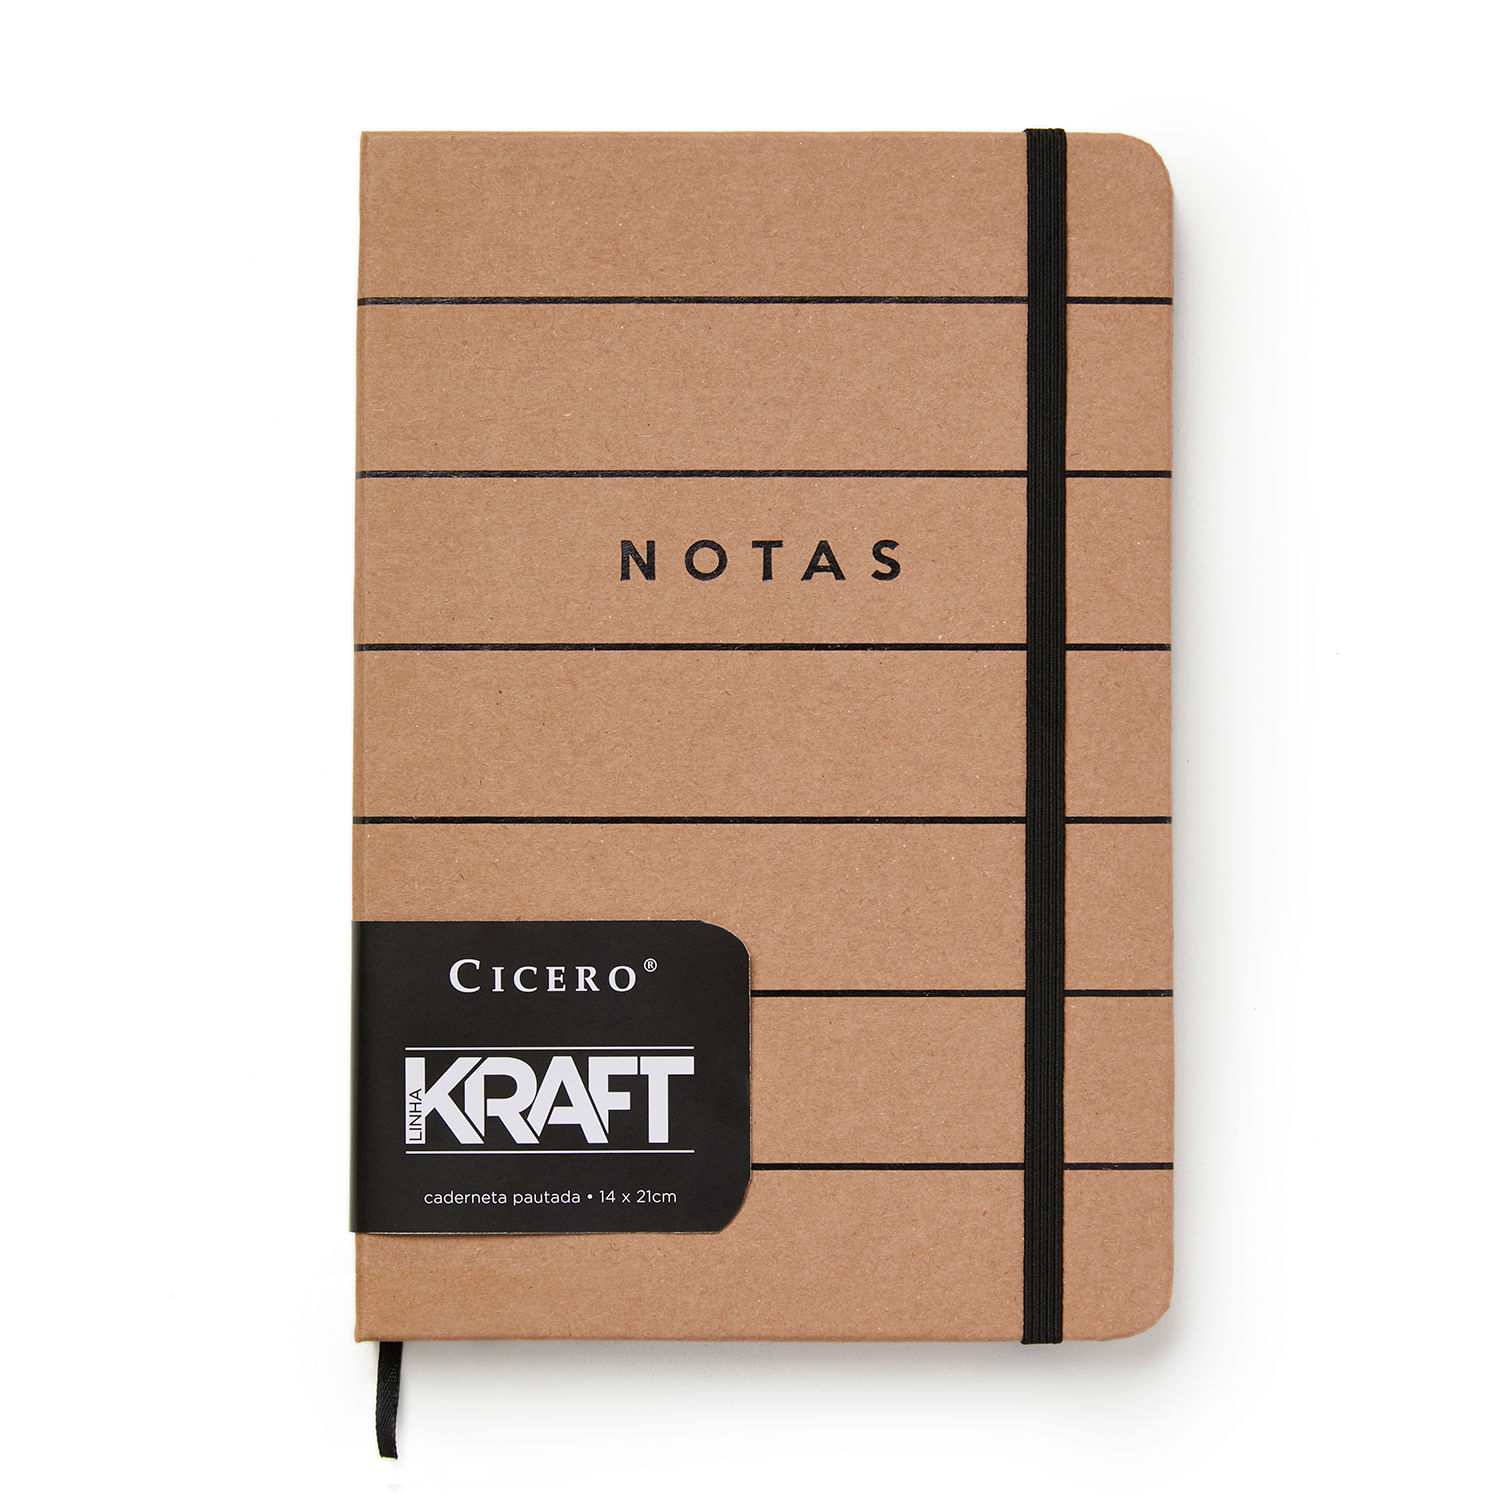 Caderneta Pautada 14x21 - Cícero -  Kraft Notas